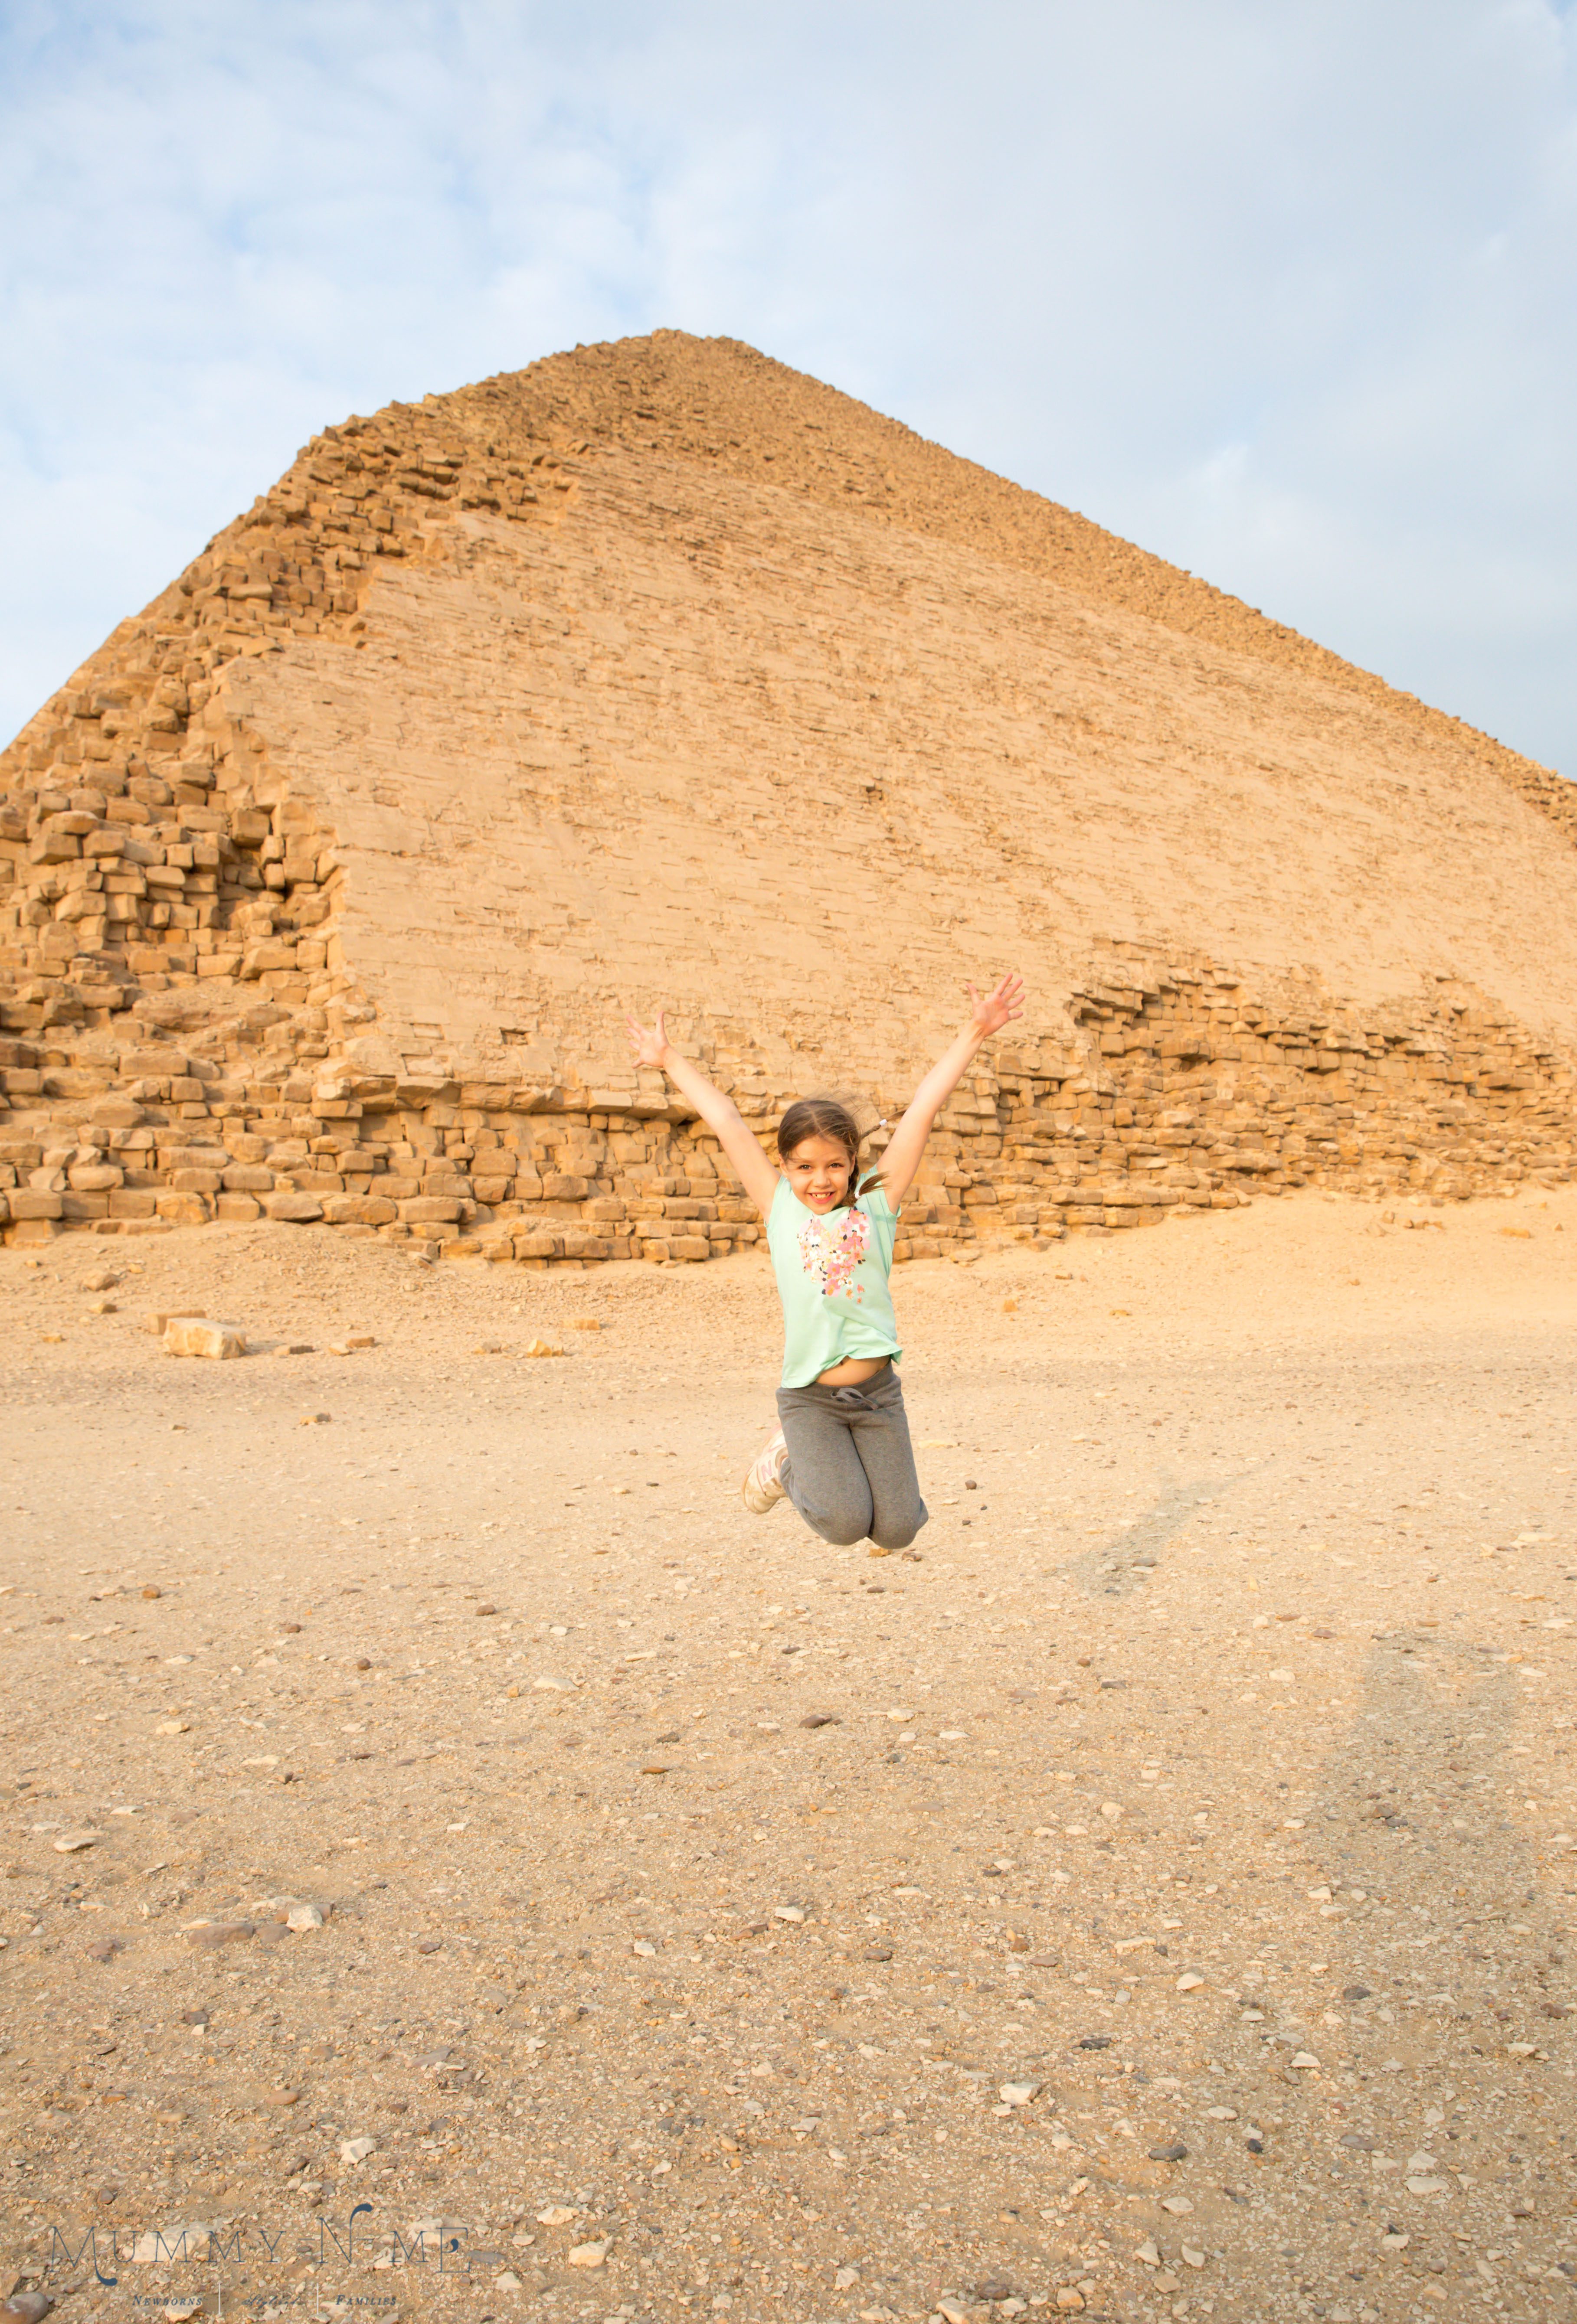 Mummy-n-Me Photography Brisbane Child Family Newborn Photographer Egypt Travels